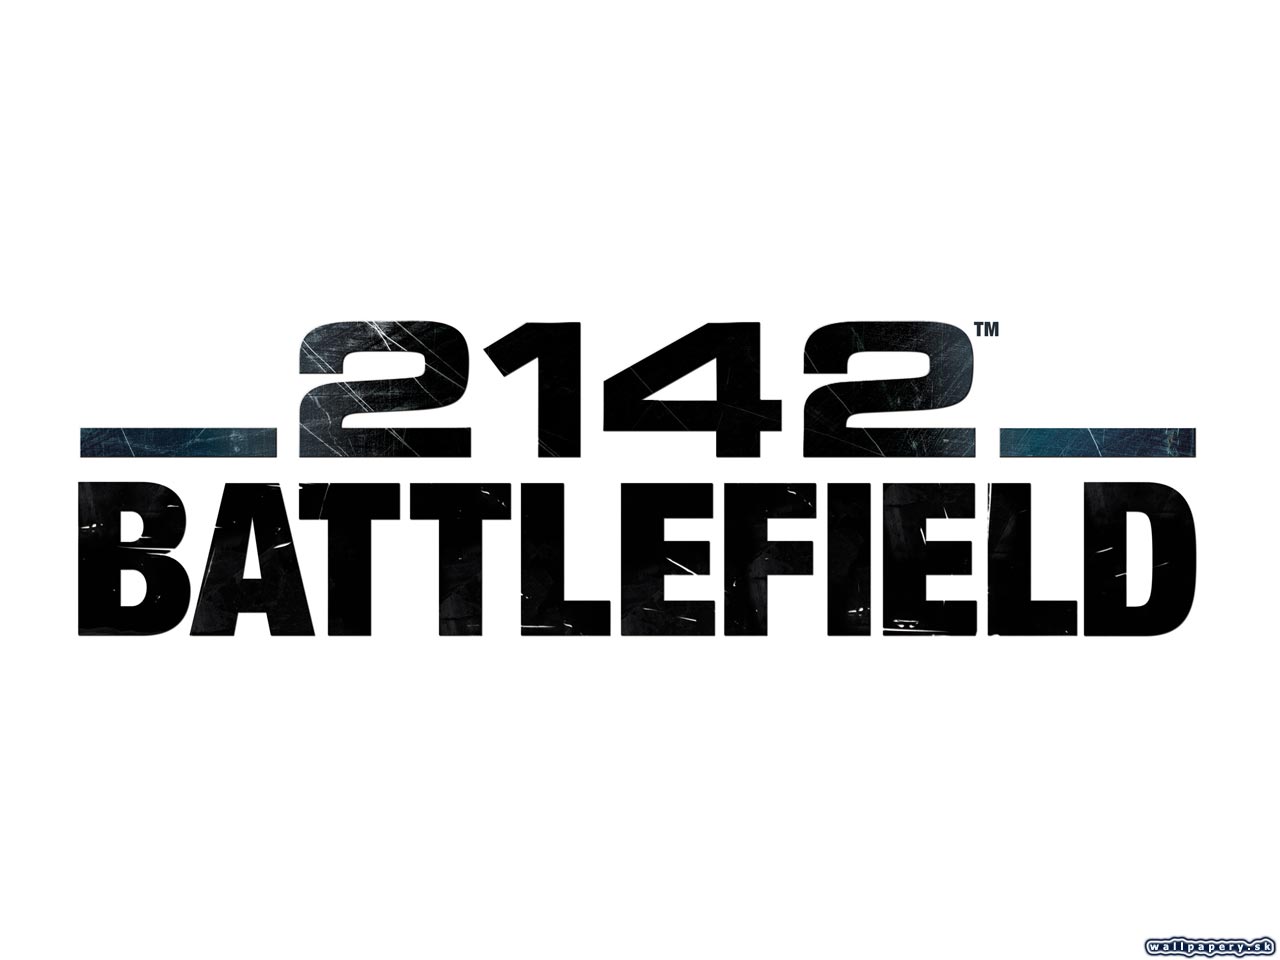 Battlefield 2142 - wallpaper 25